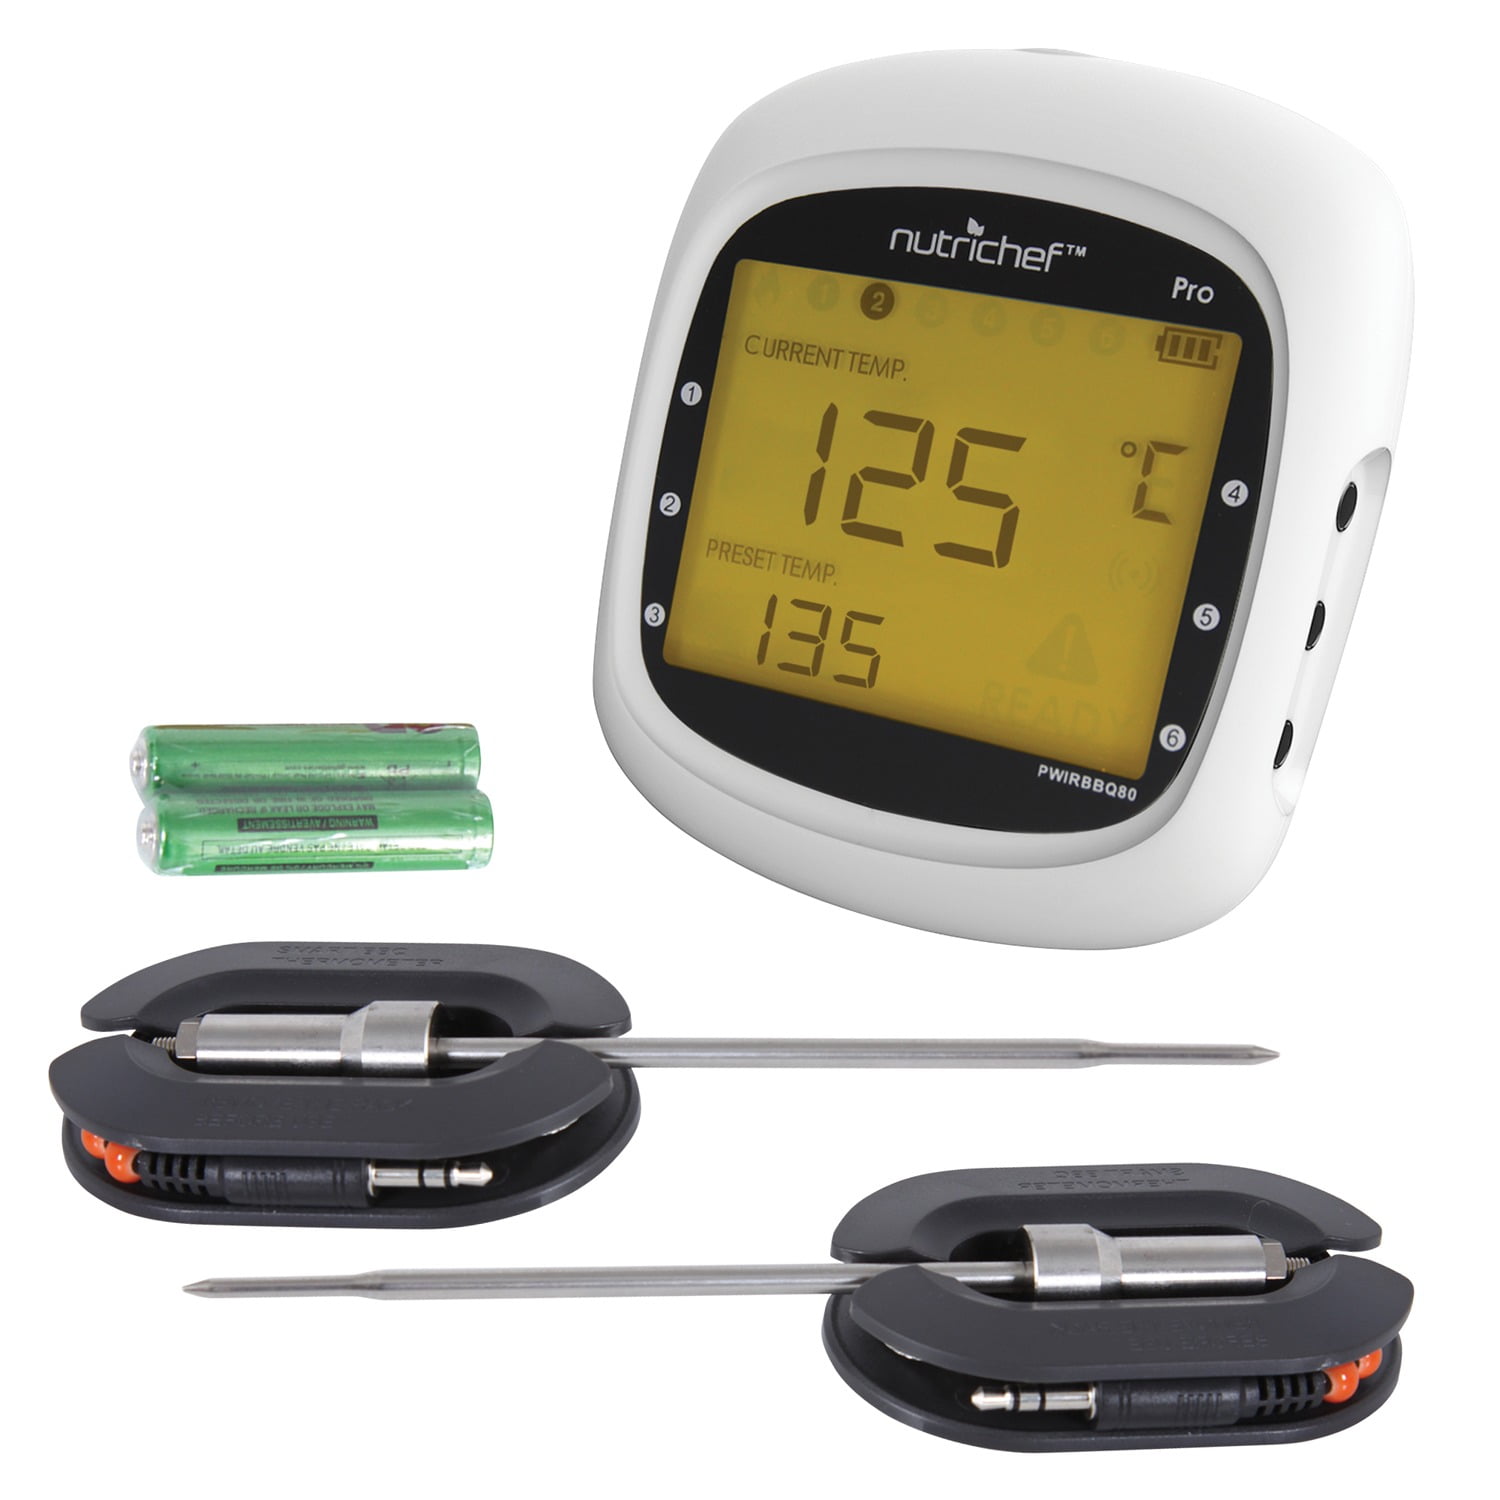 Easy BBQ Nano Smart Wireless Thermometer Black